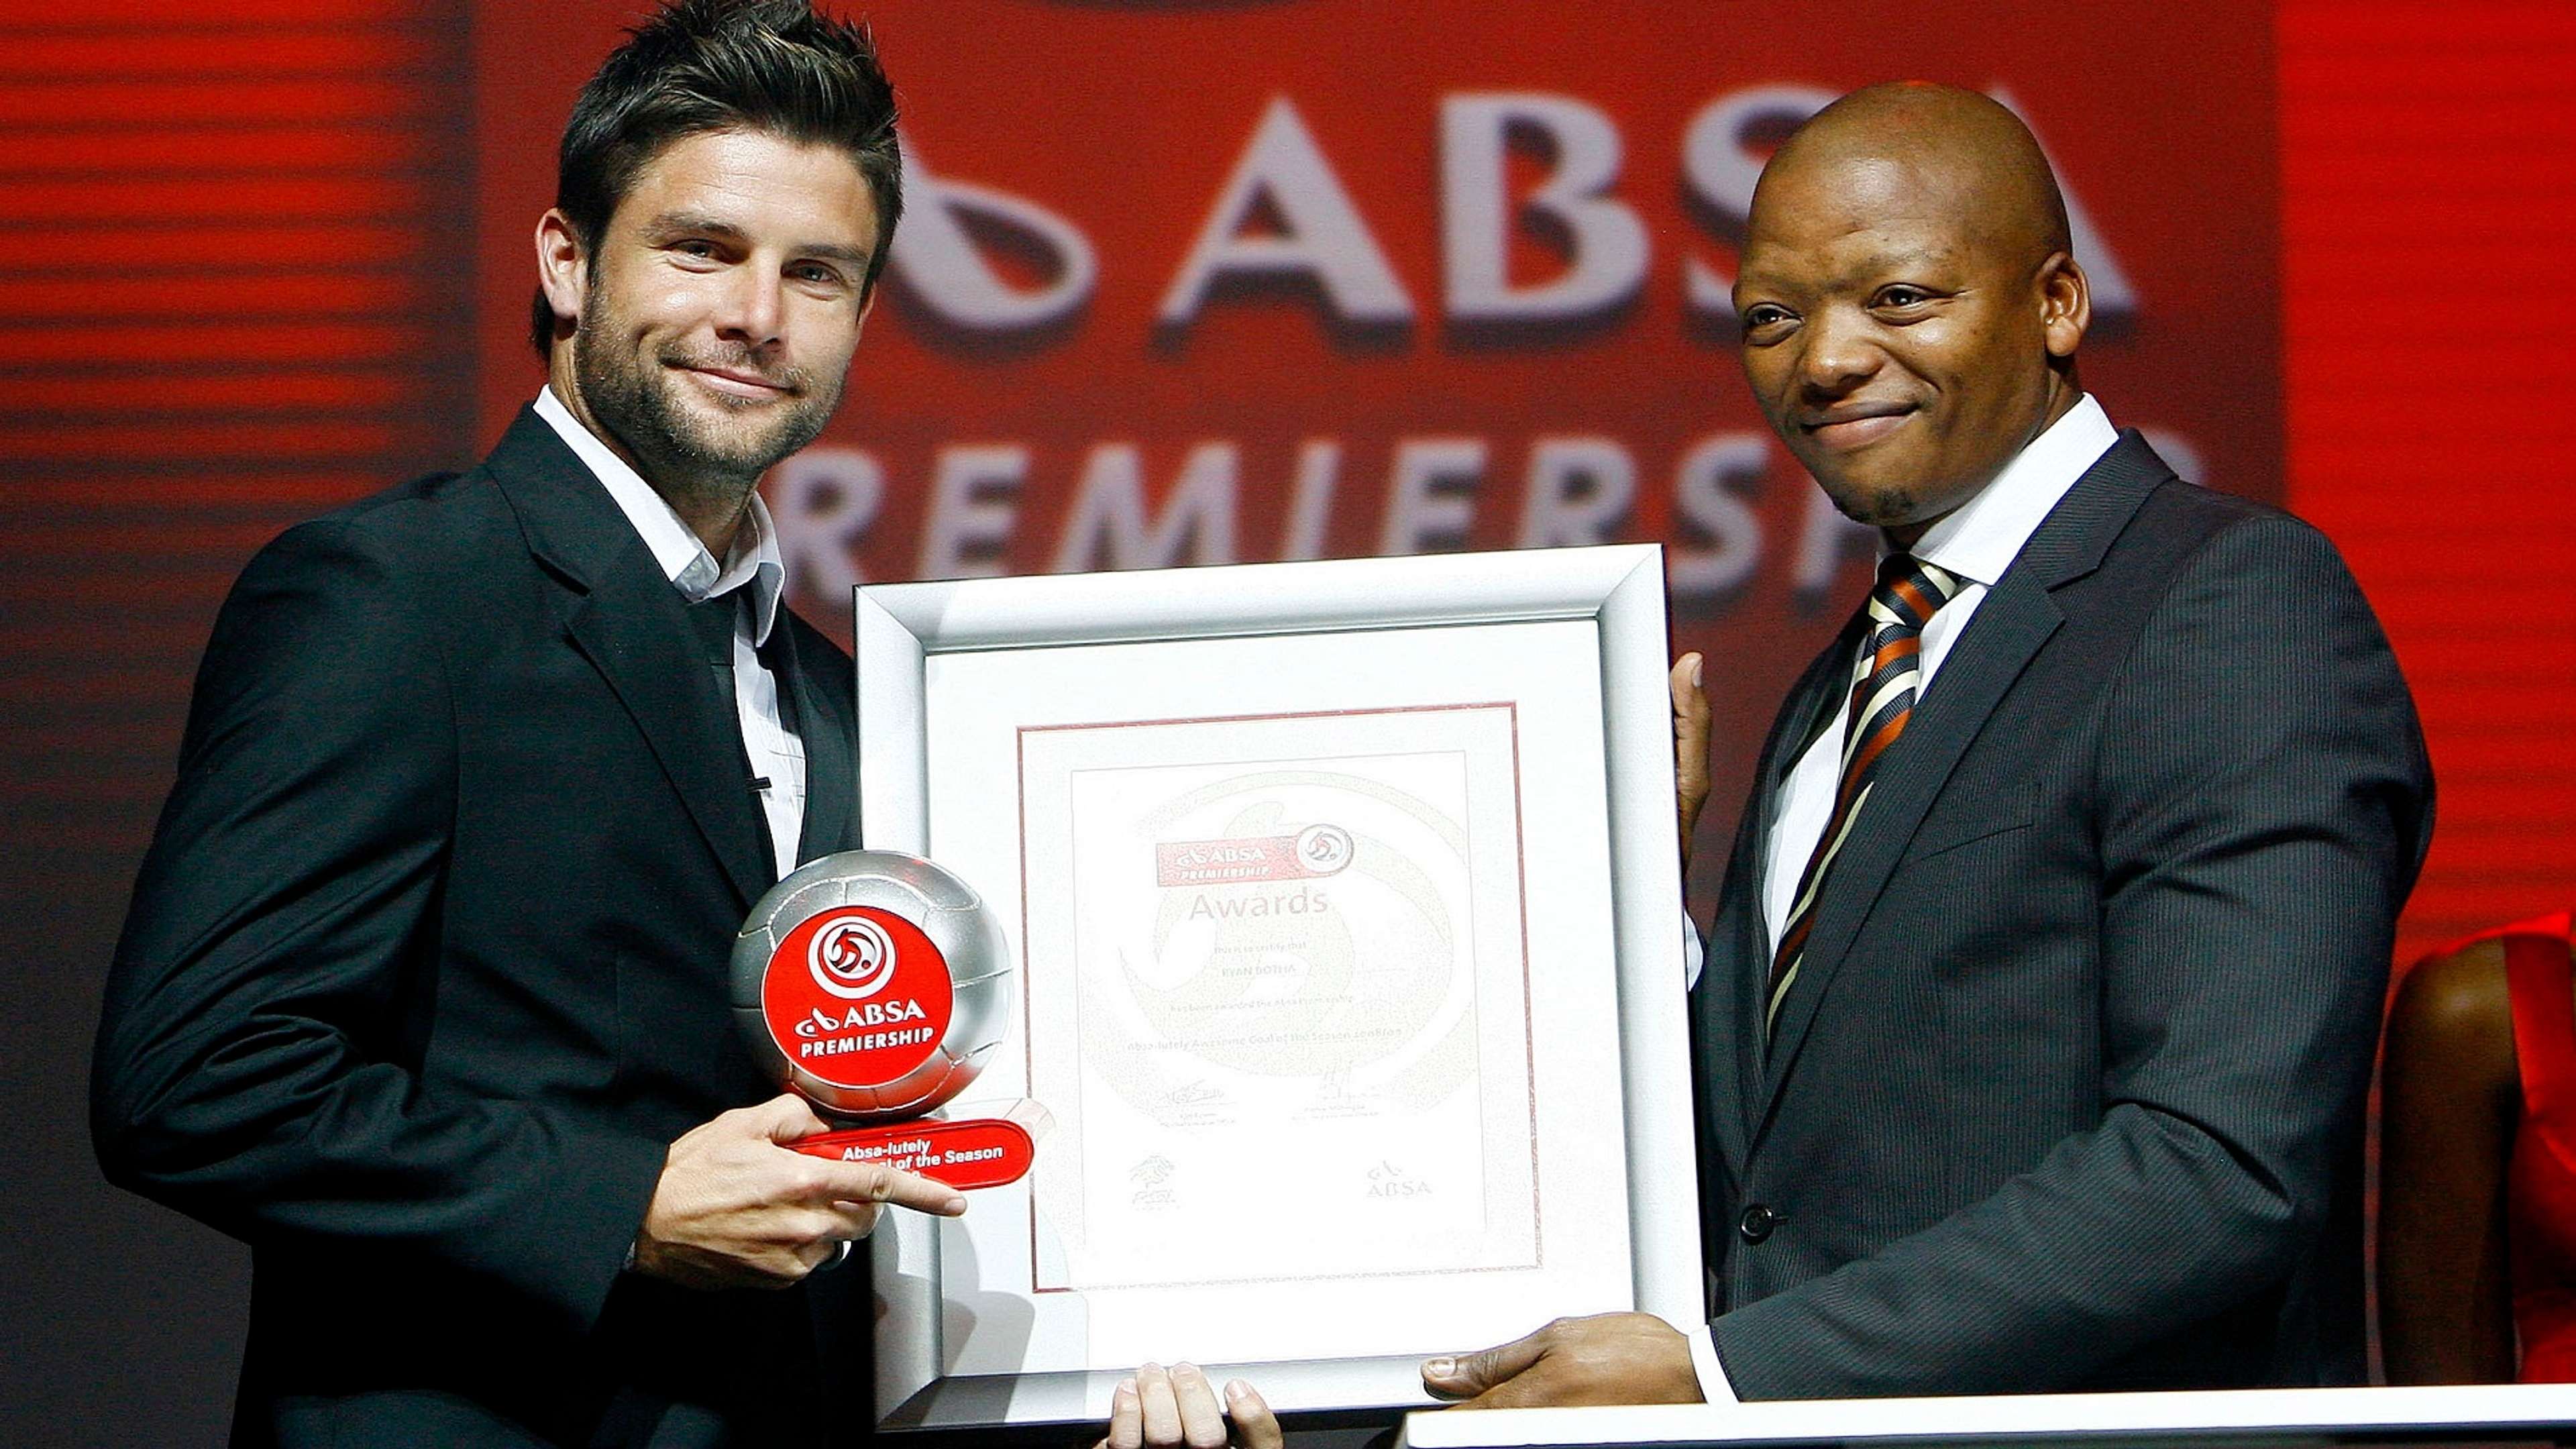 Ryan Botha Moroka Swallows winning winning absa-lutley awesome goal PSL 2008/2009